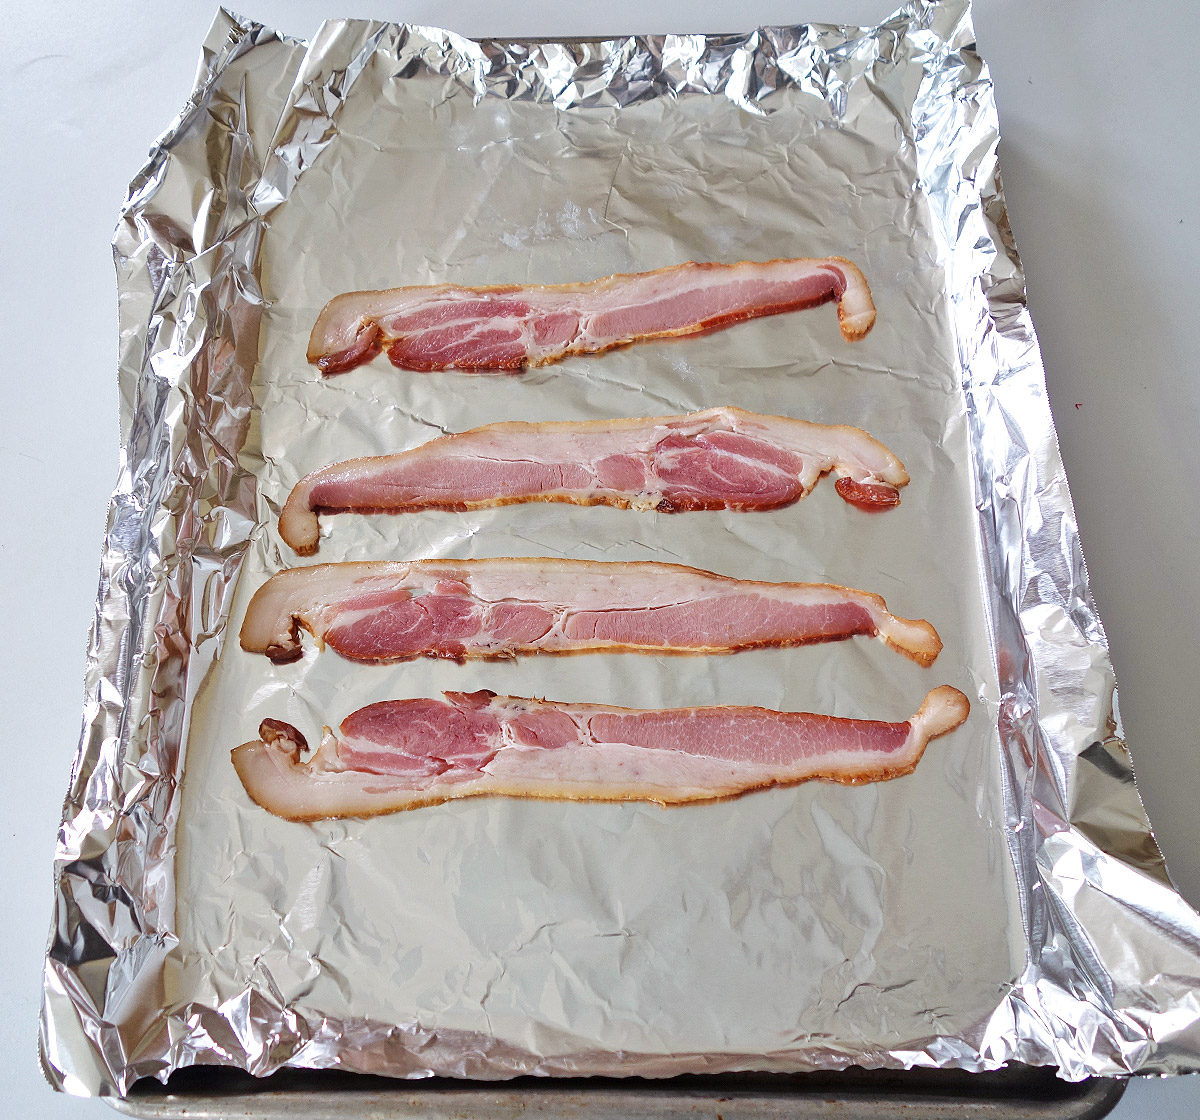 best way to cook bacon | burgerartist.com